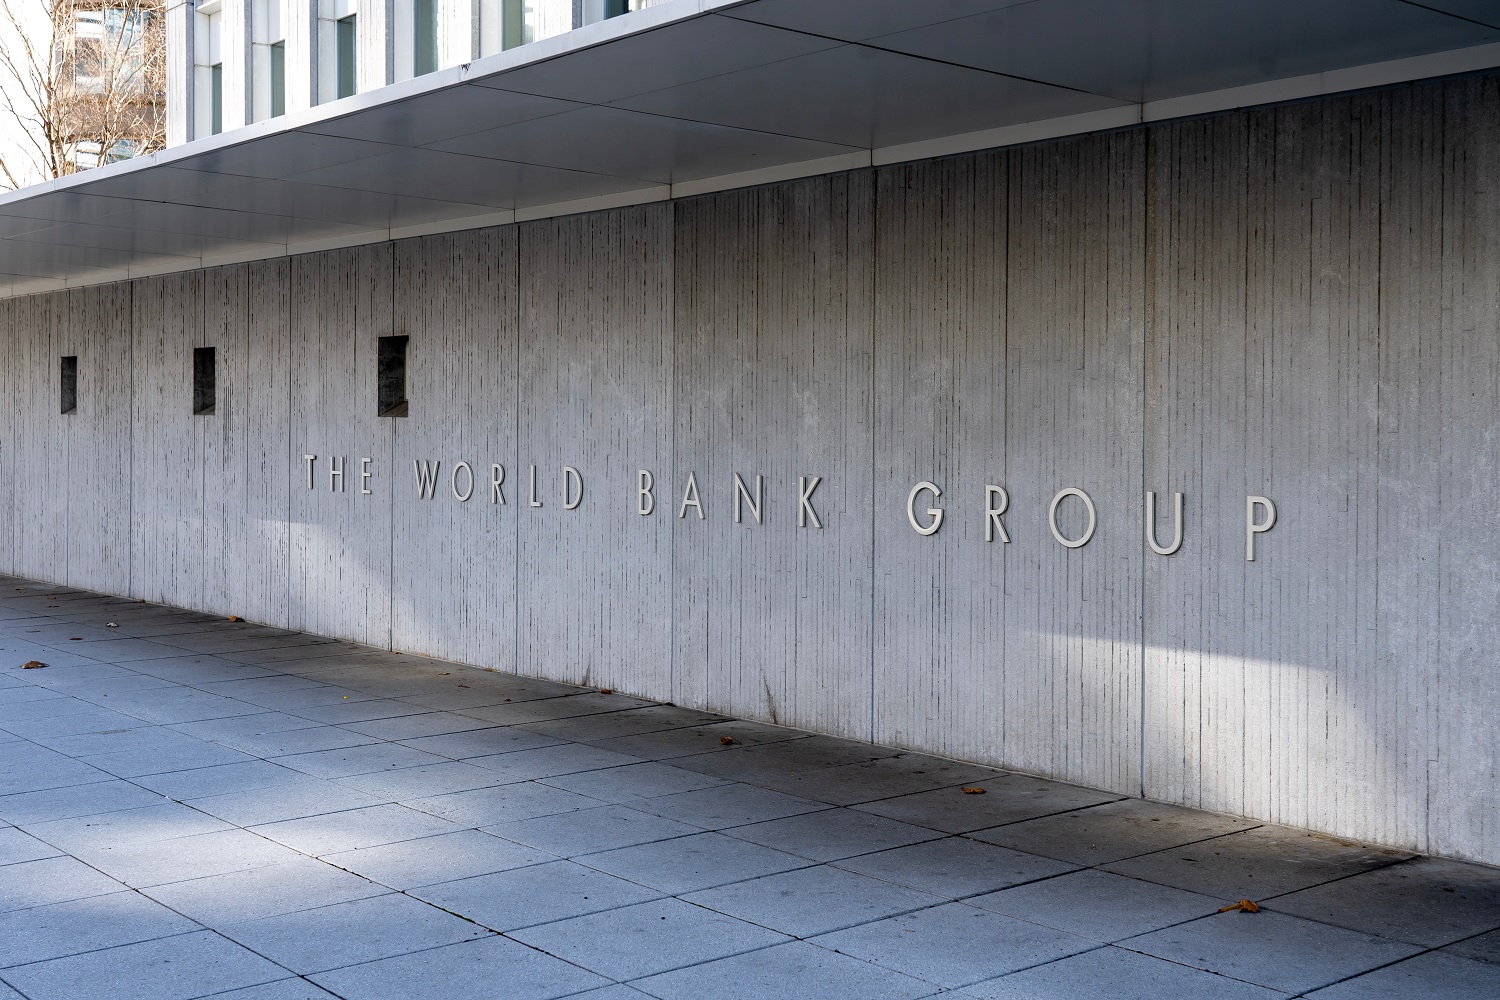 Image of World Bank Group facade